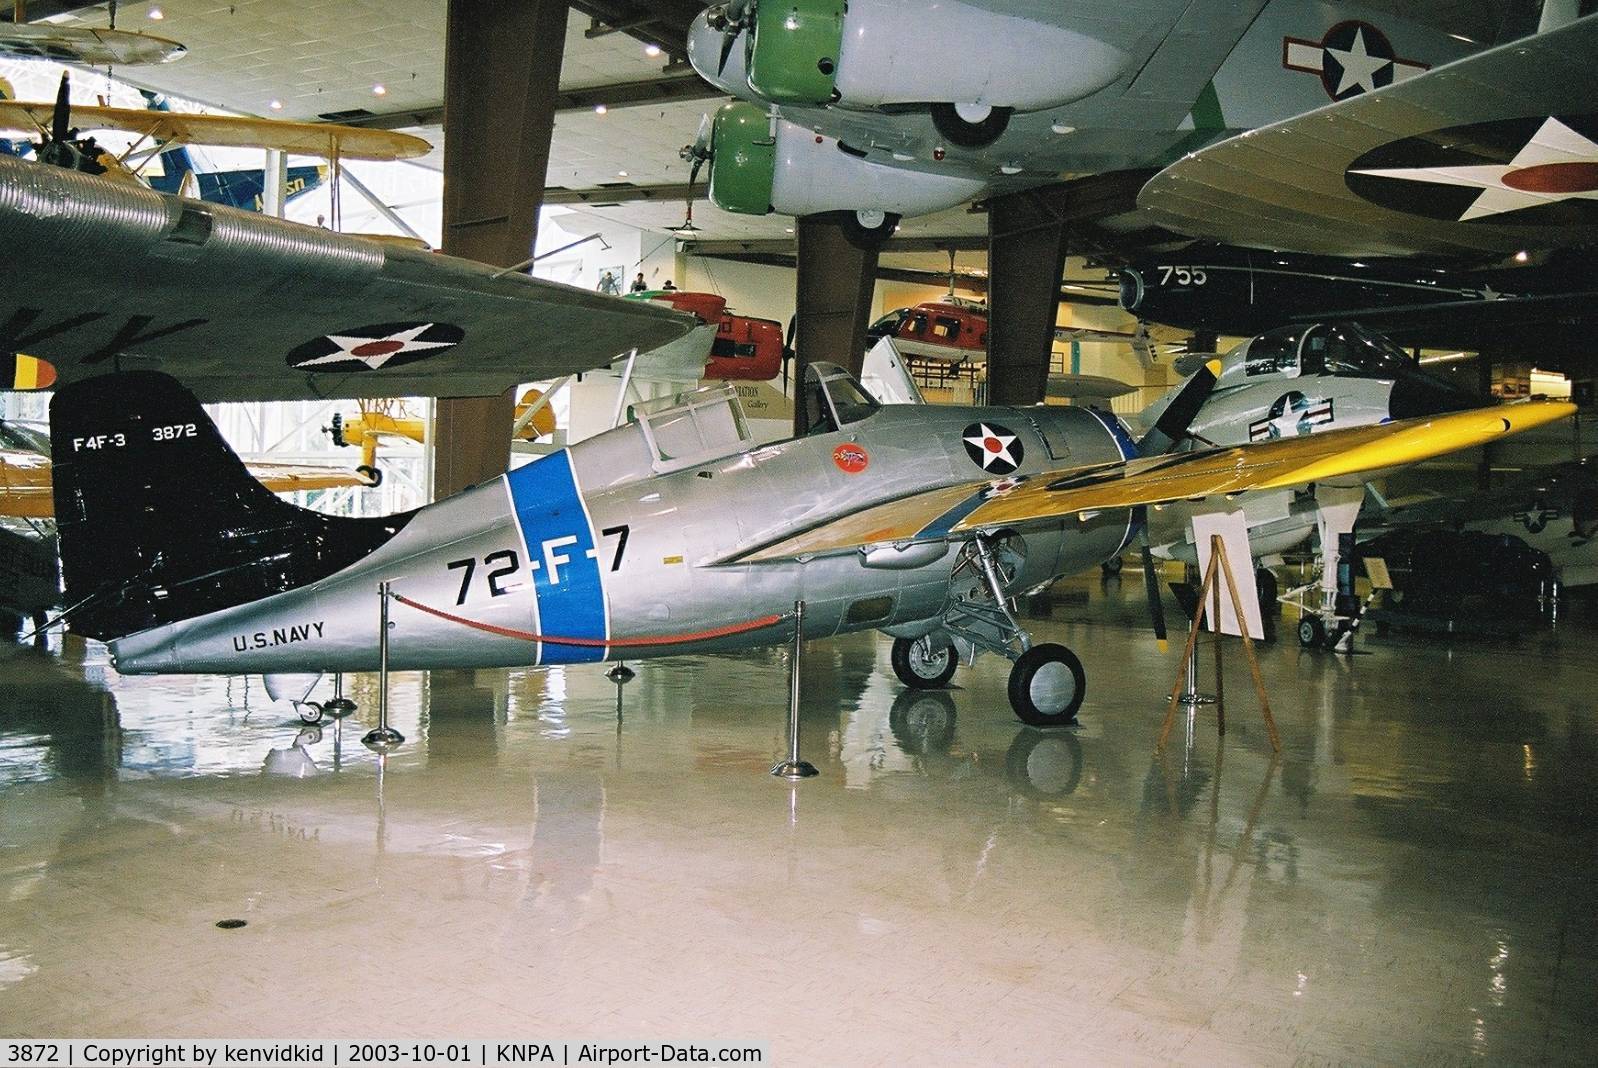 3872, Grumman F4F-3 Wildcat C/N 754, On display at the Museum of Naval Aviation, Pensacola.